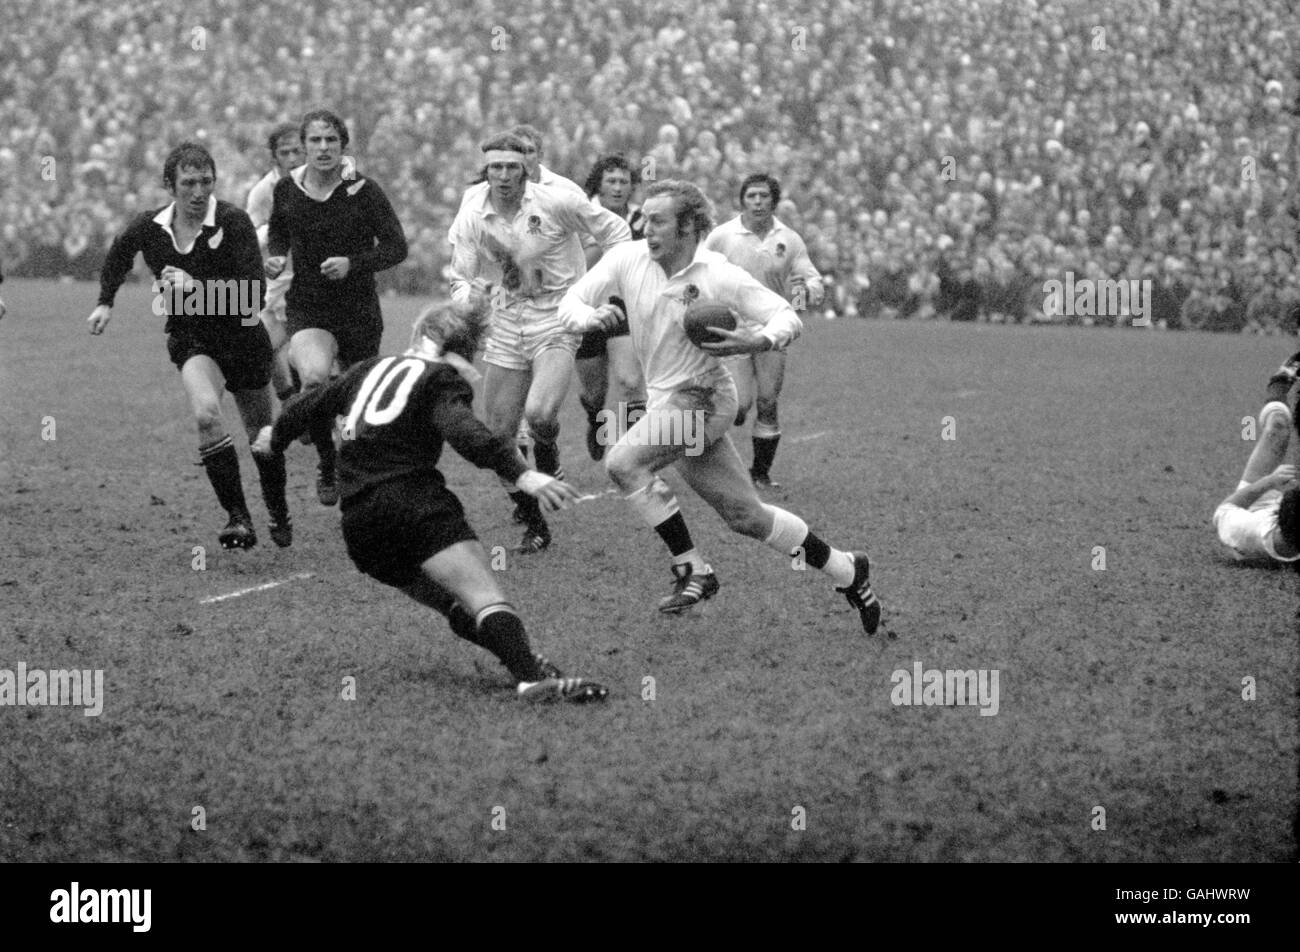 Rugby Union - New Zealand Tour of Britain 1972-73 - England contra Nueva Zelanda. Ian Stevens (10), de Nueva Zelanda, se enfrenta a David Duckham (r), de Inglaterra. Foto de stock